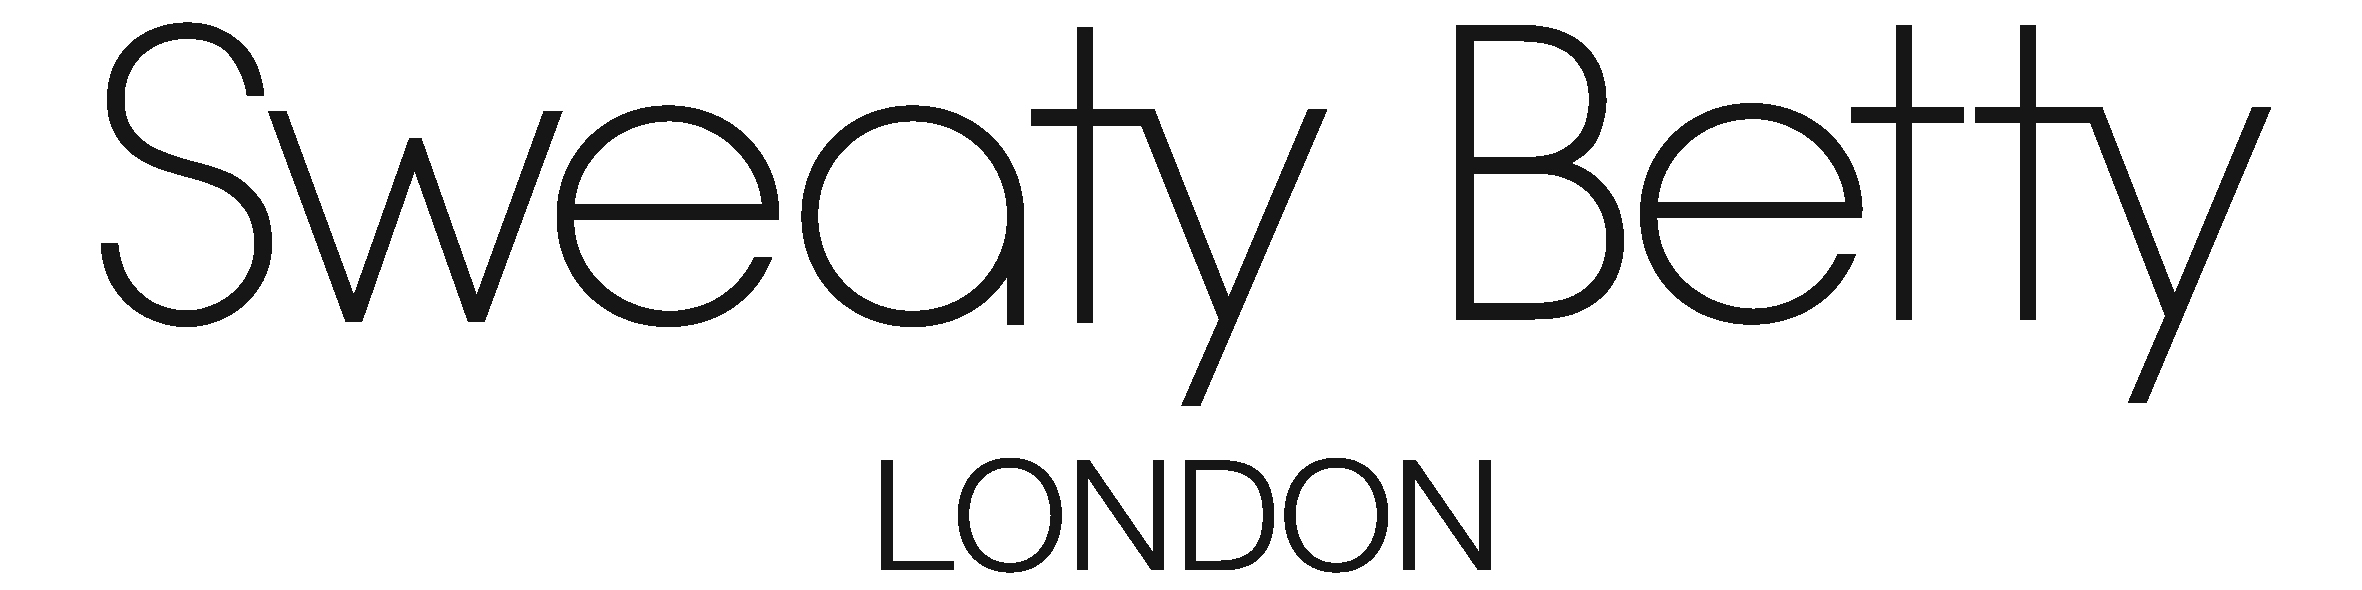 Sweaty_Betty_London_Logo_Black